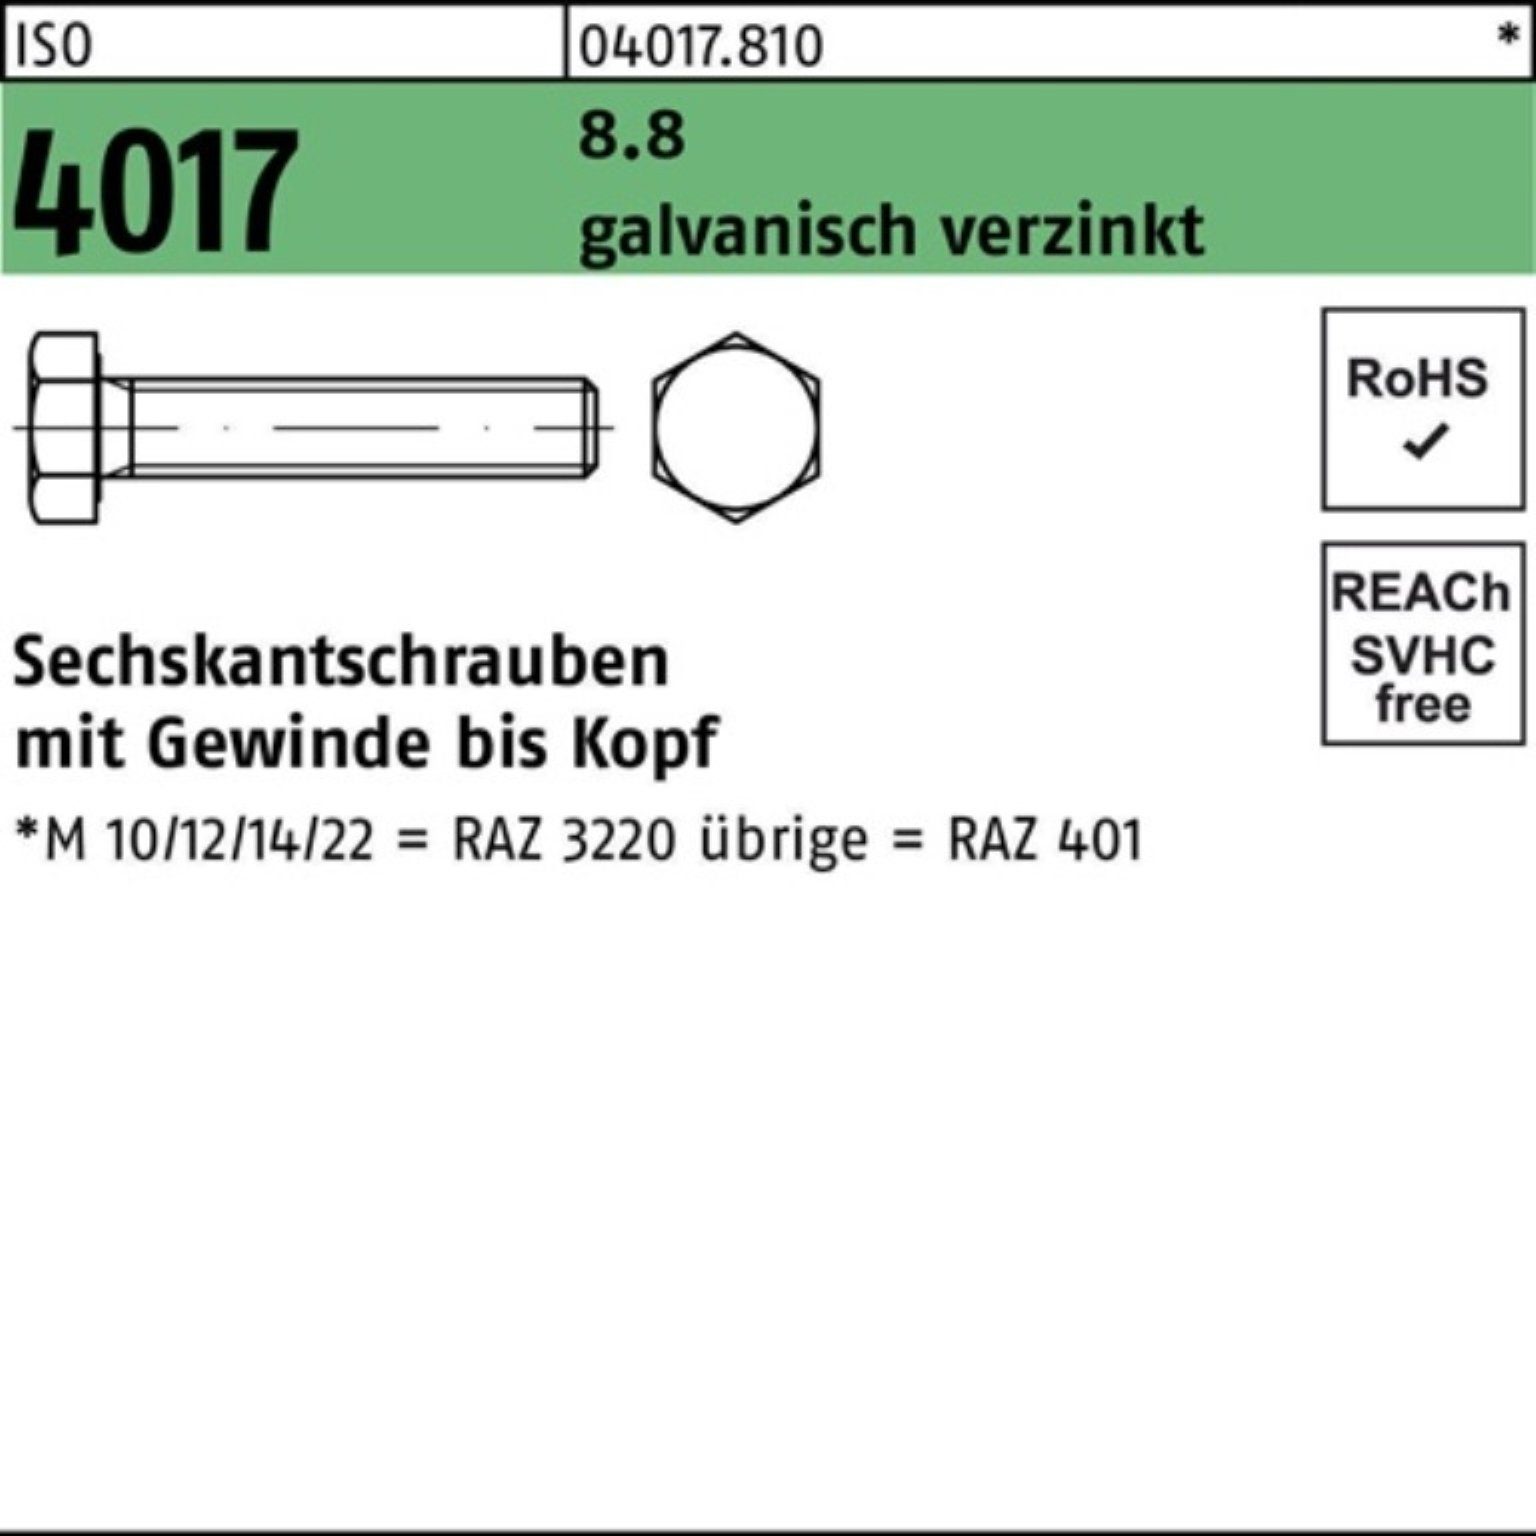 Sechskantschraube 10 4017 St Bufab VG Sechskantschraube Pack M22x 8.8 galv.verz. 100er ISO 100